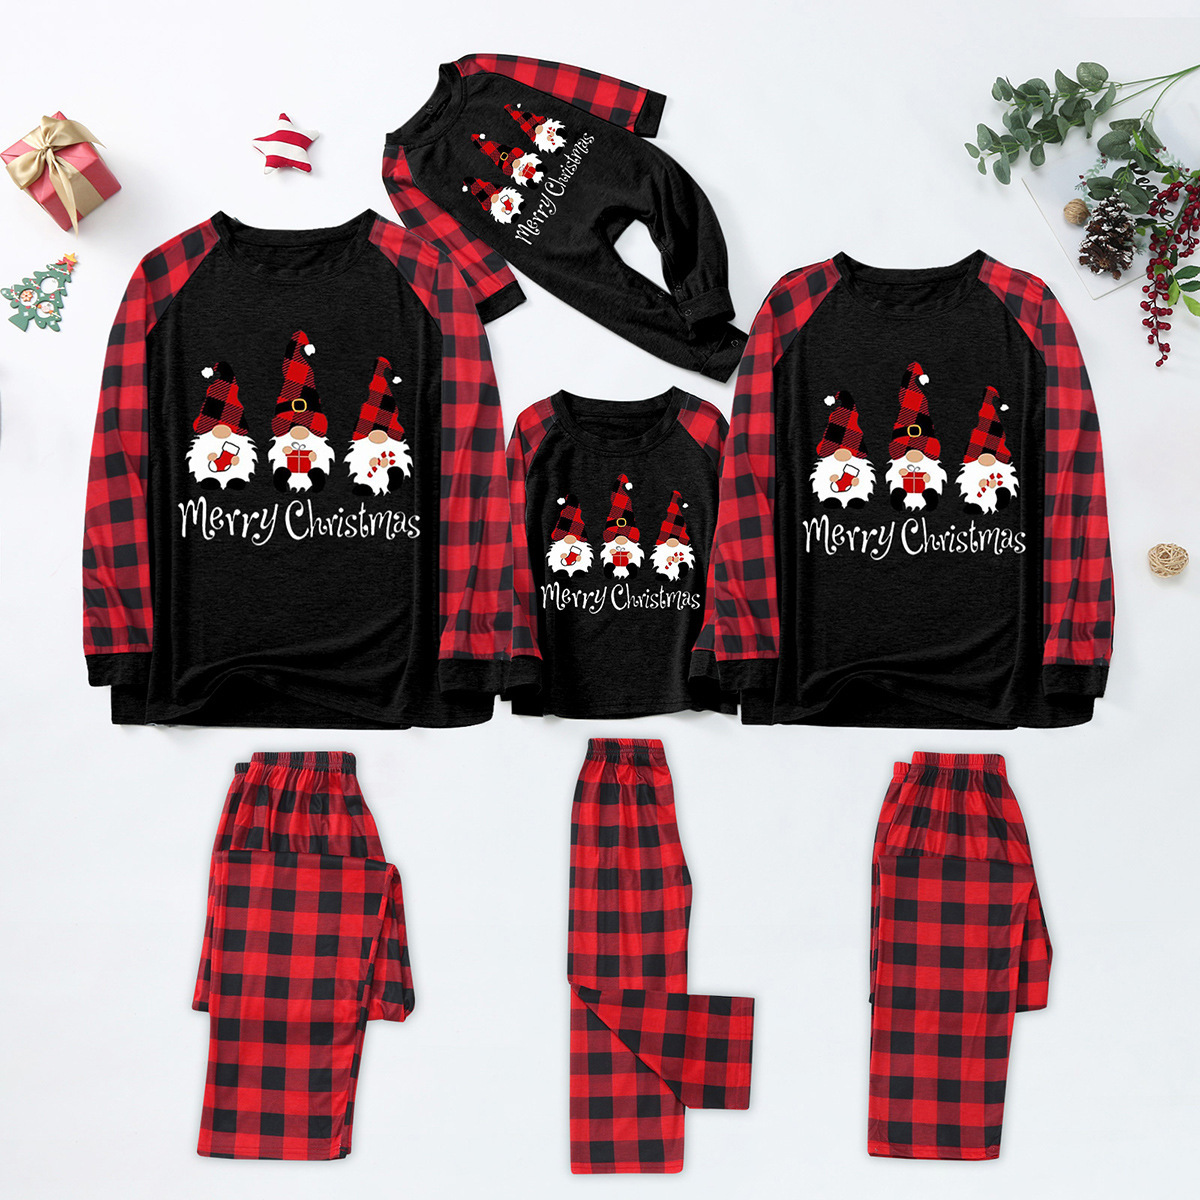 Christmas parent-child outfit Three santas